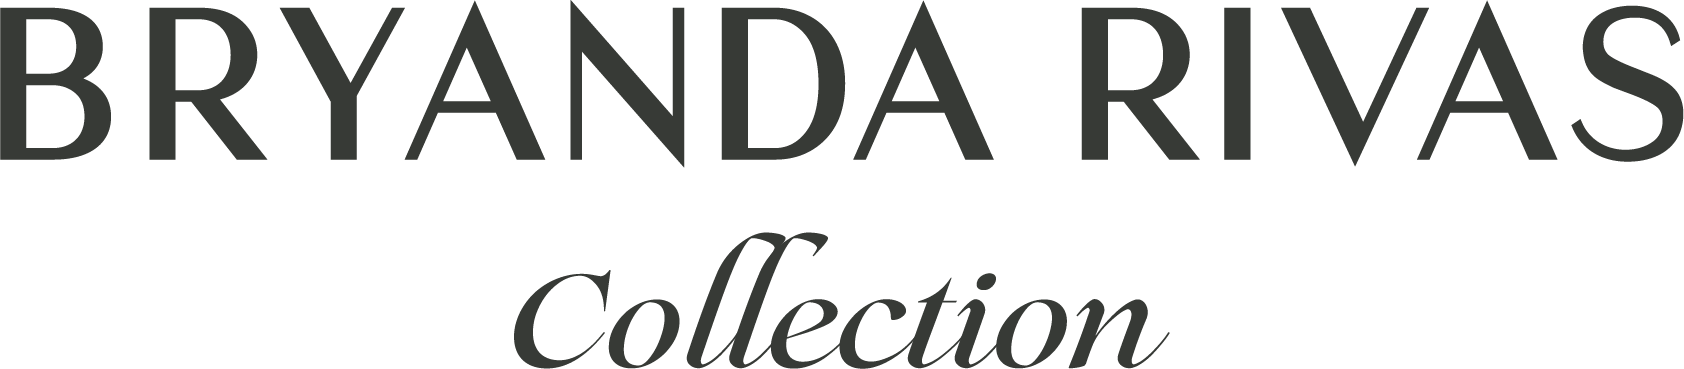 Bryanda Rivas Collection